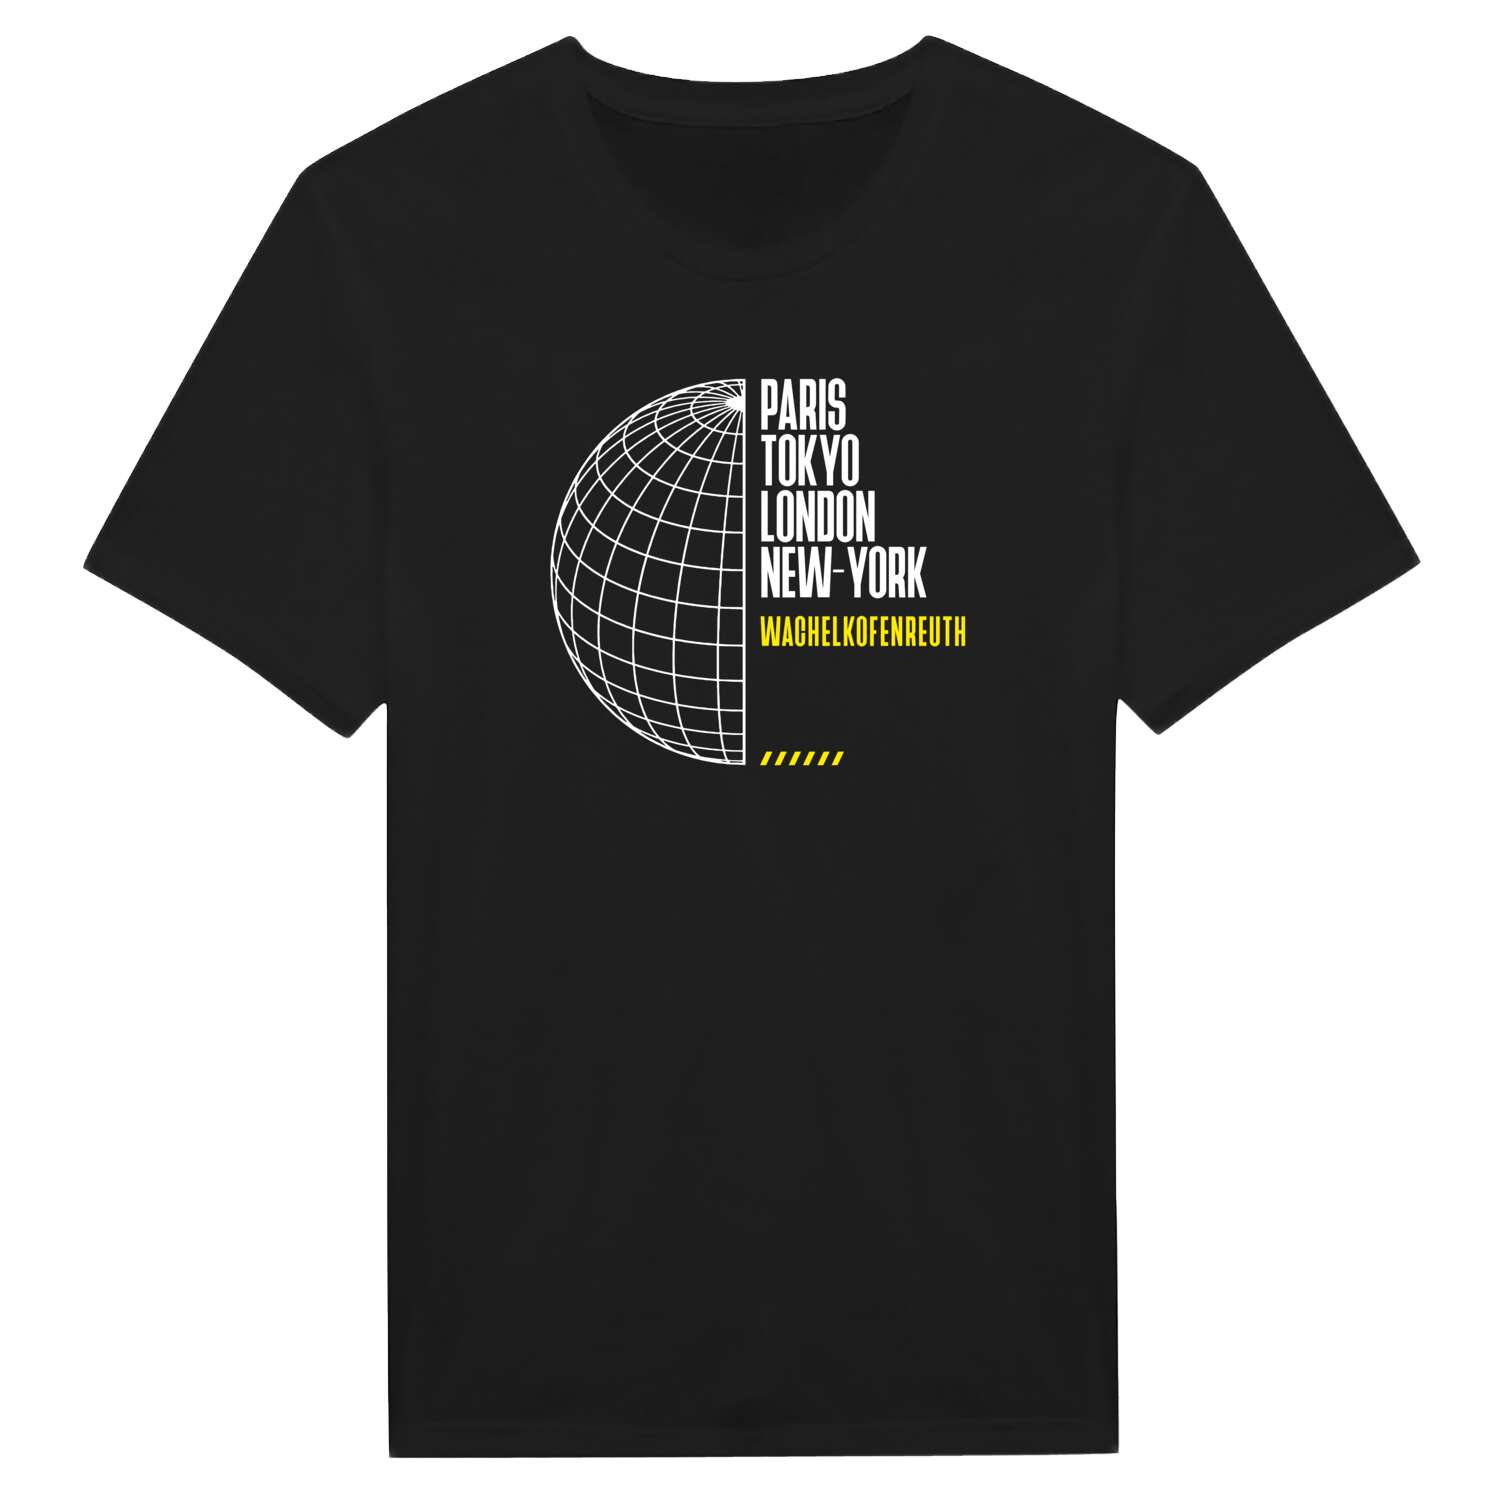 Wachelkofenreuth T-Shirt »Paris Tokyo London«